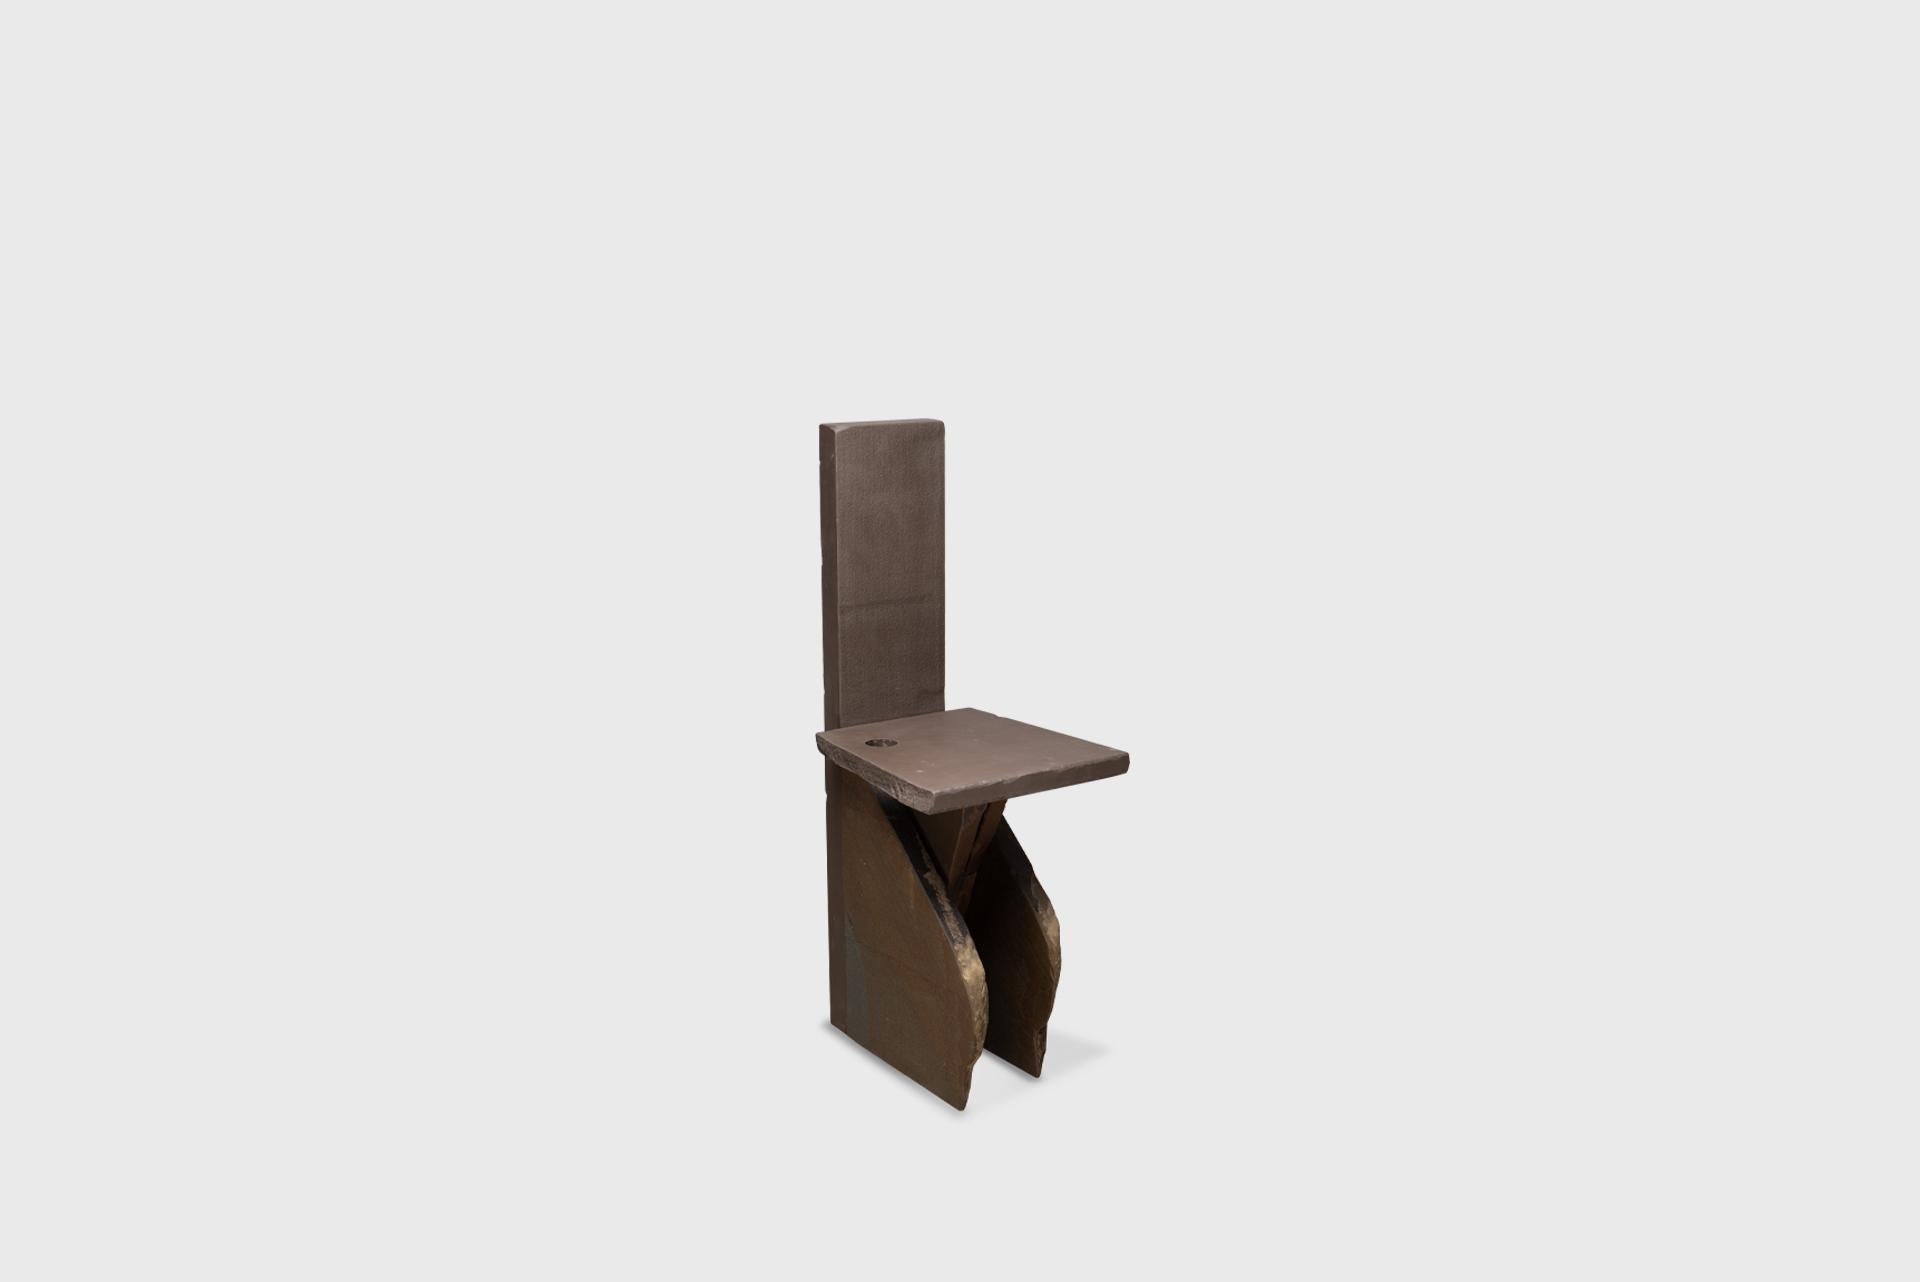 Contemporary Natural Chair 23, Graywacke Offcut Gray Stone, Carsten in der Elst en vente 2